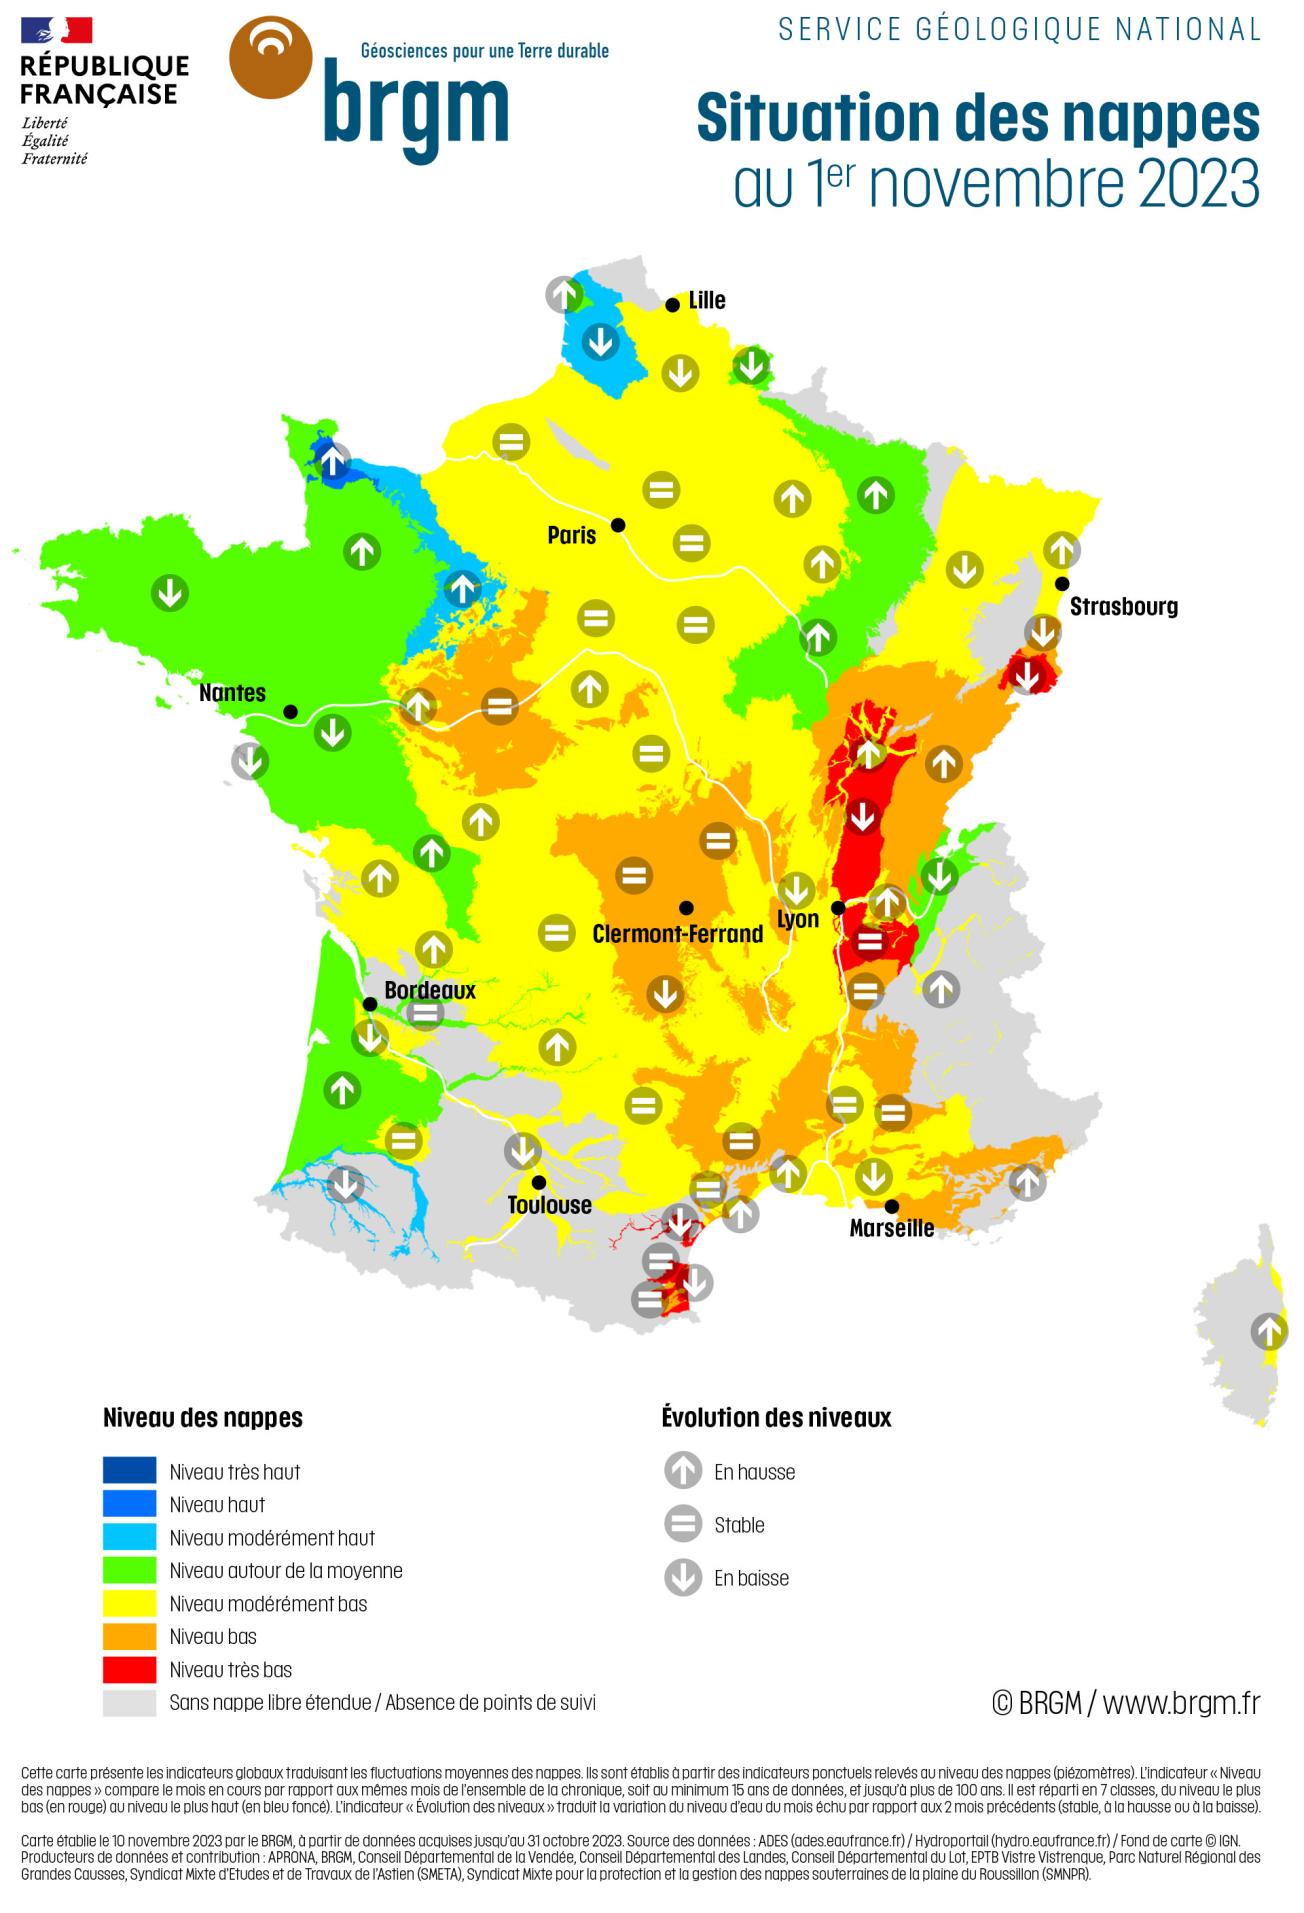 Map of aquifer levels in mainland France on 1 November 2023.